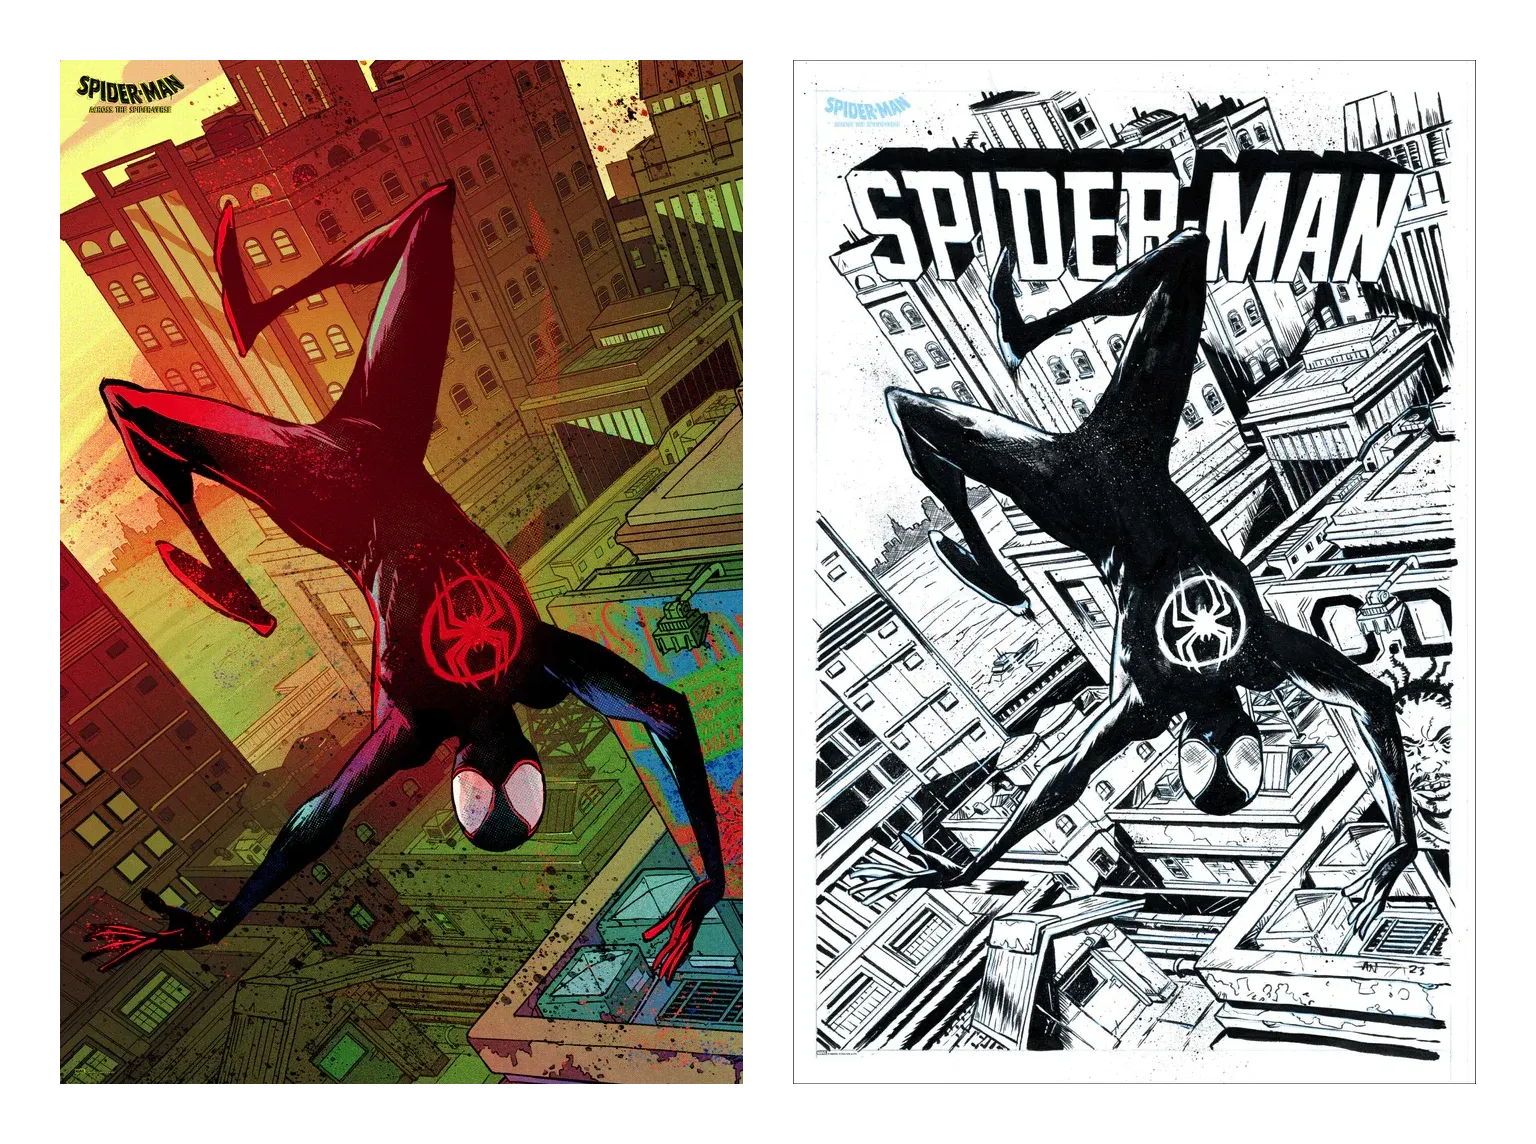 True Life Tales of Spider-Man #9 by Sanforde Greene